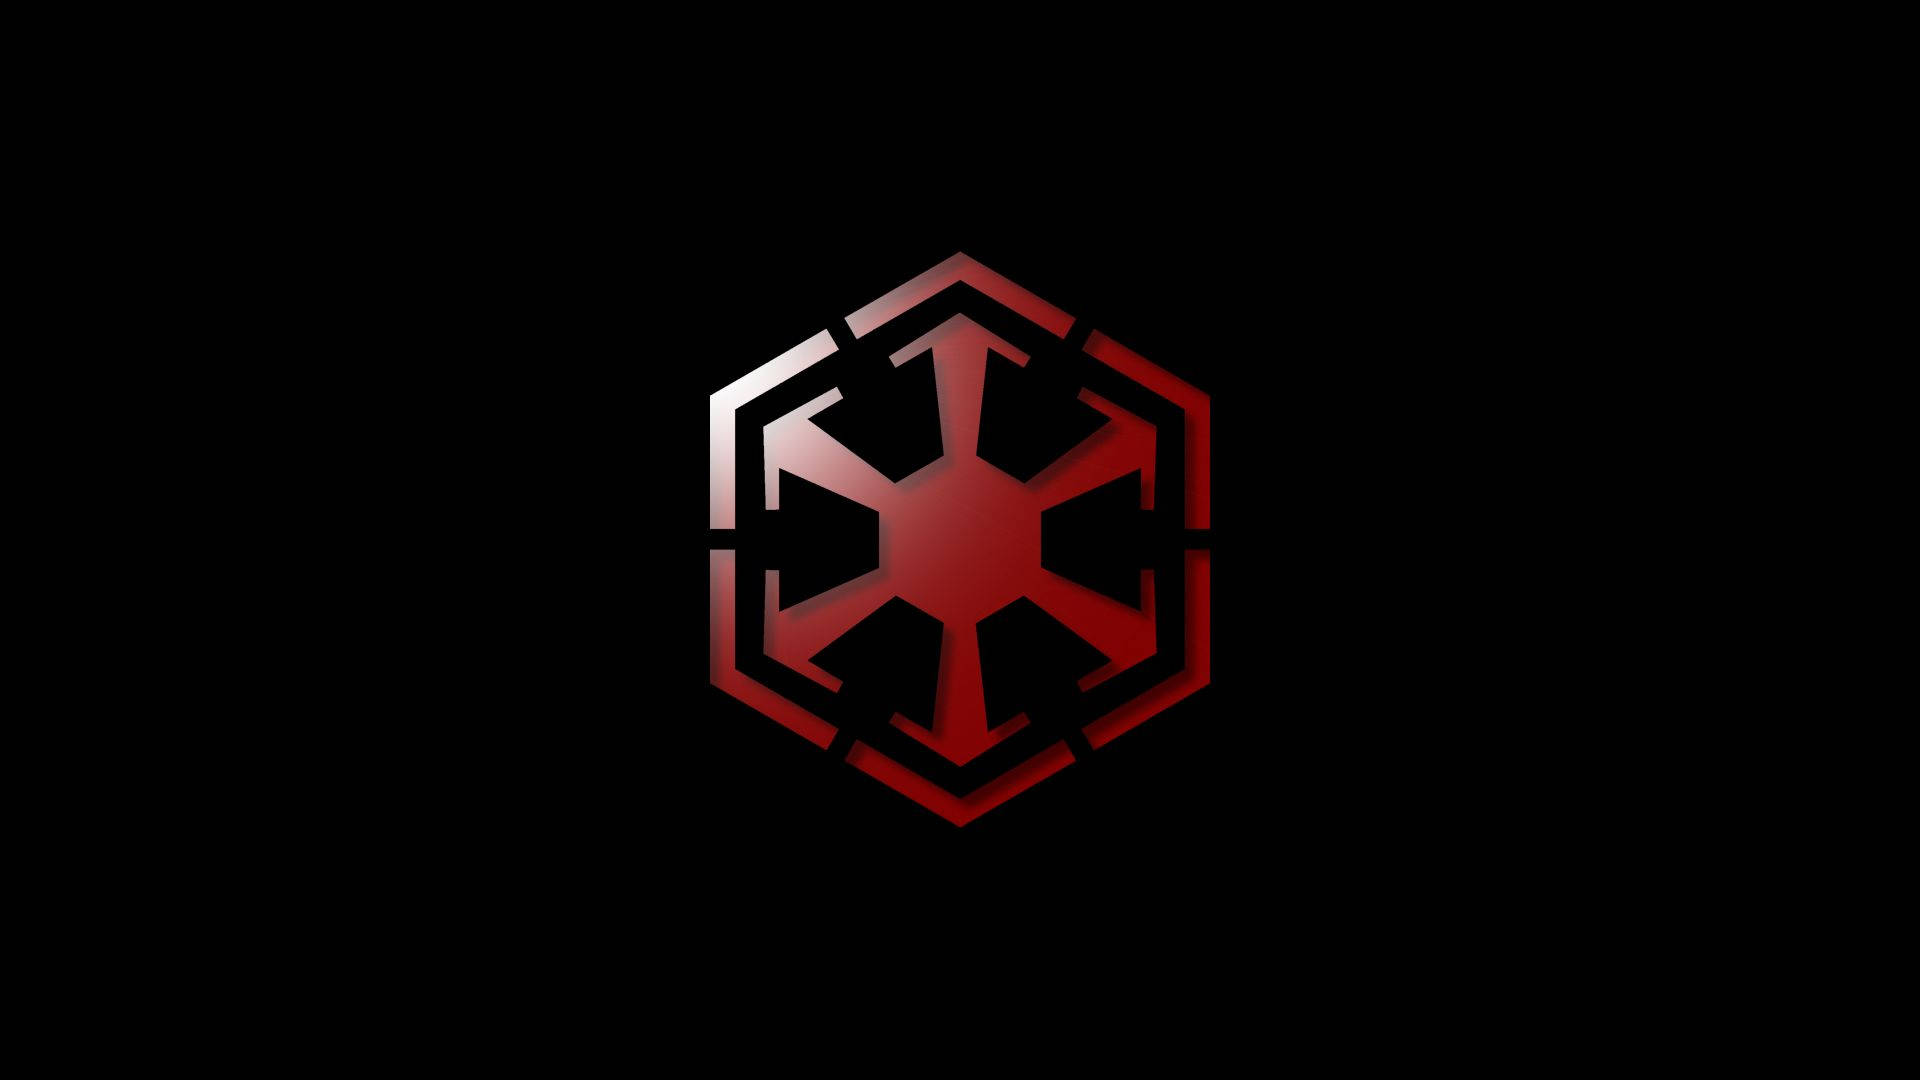 Official Sith Logo Wallpaper